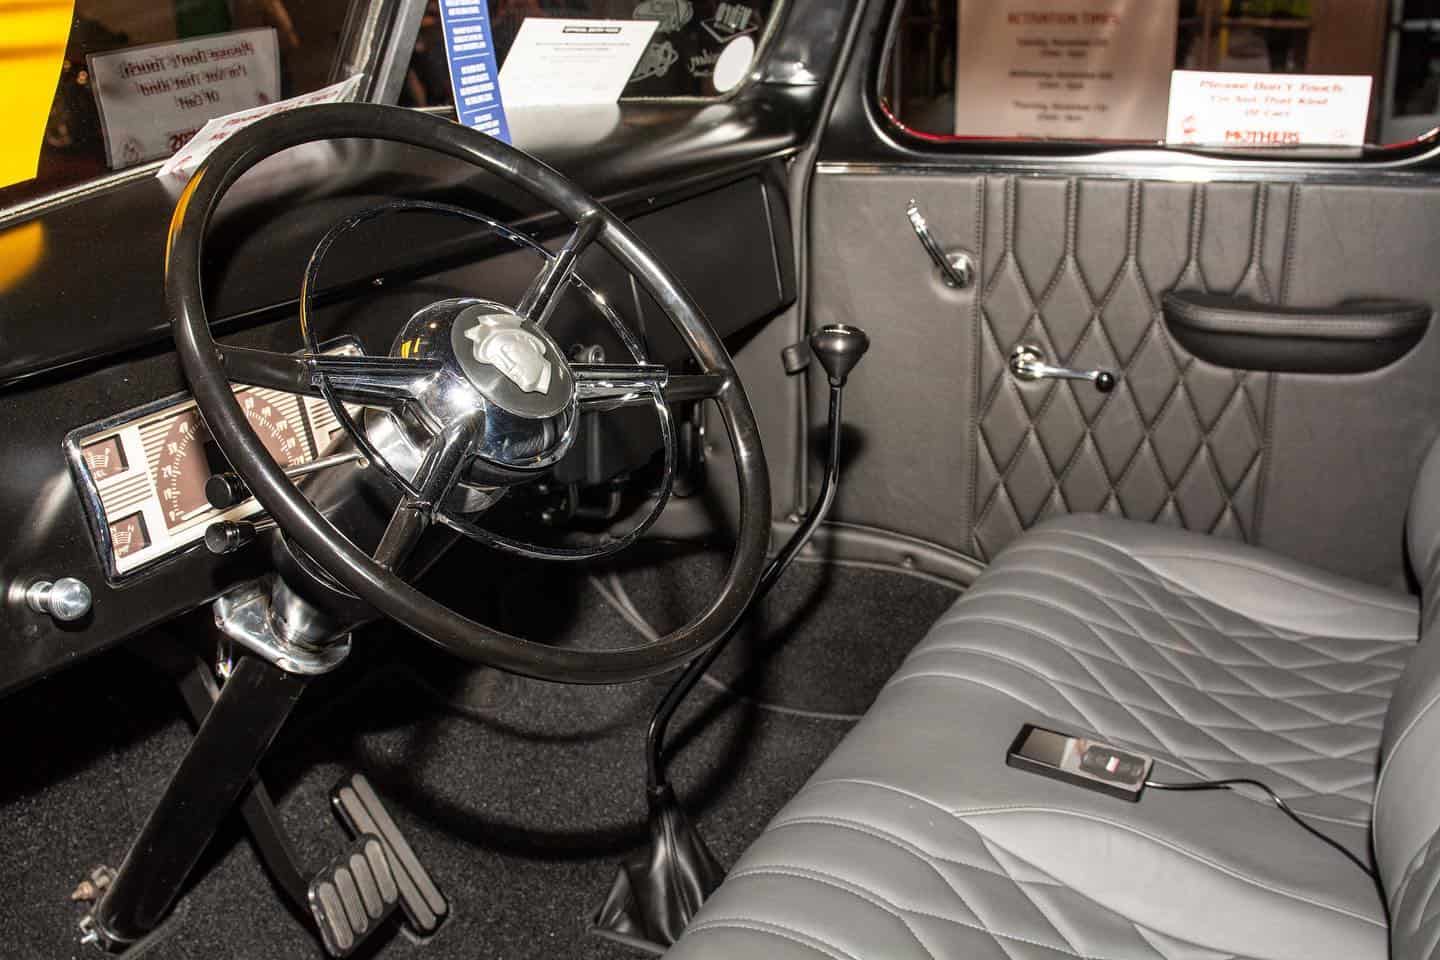 1941 Ford COE Custom Hauler Interior. Photo - The Transmission on Facebook